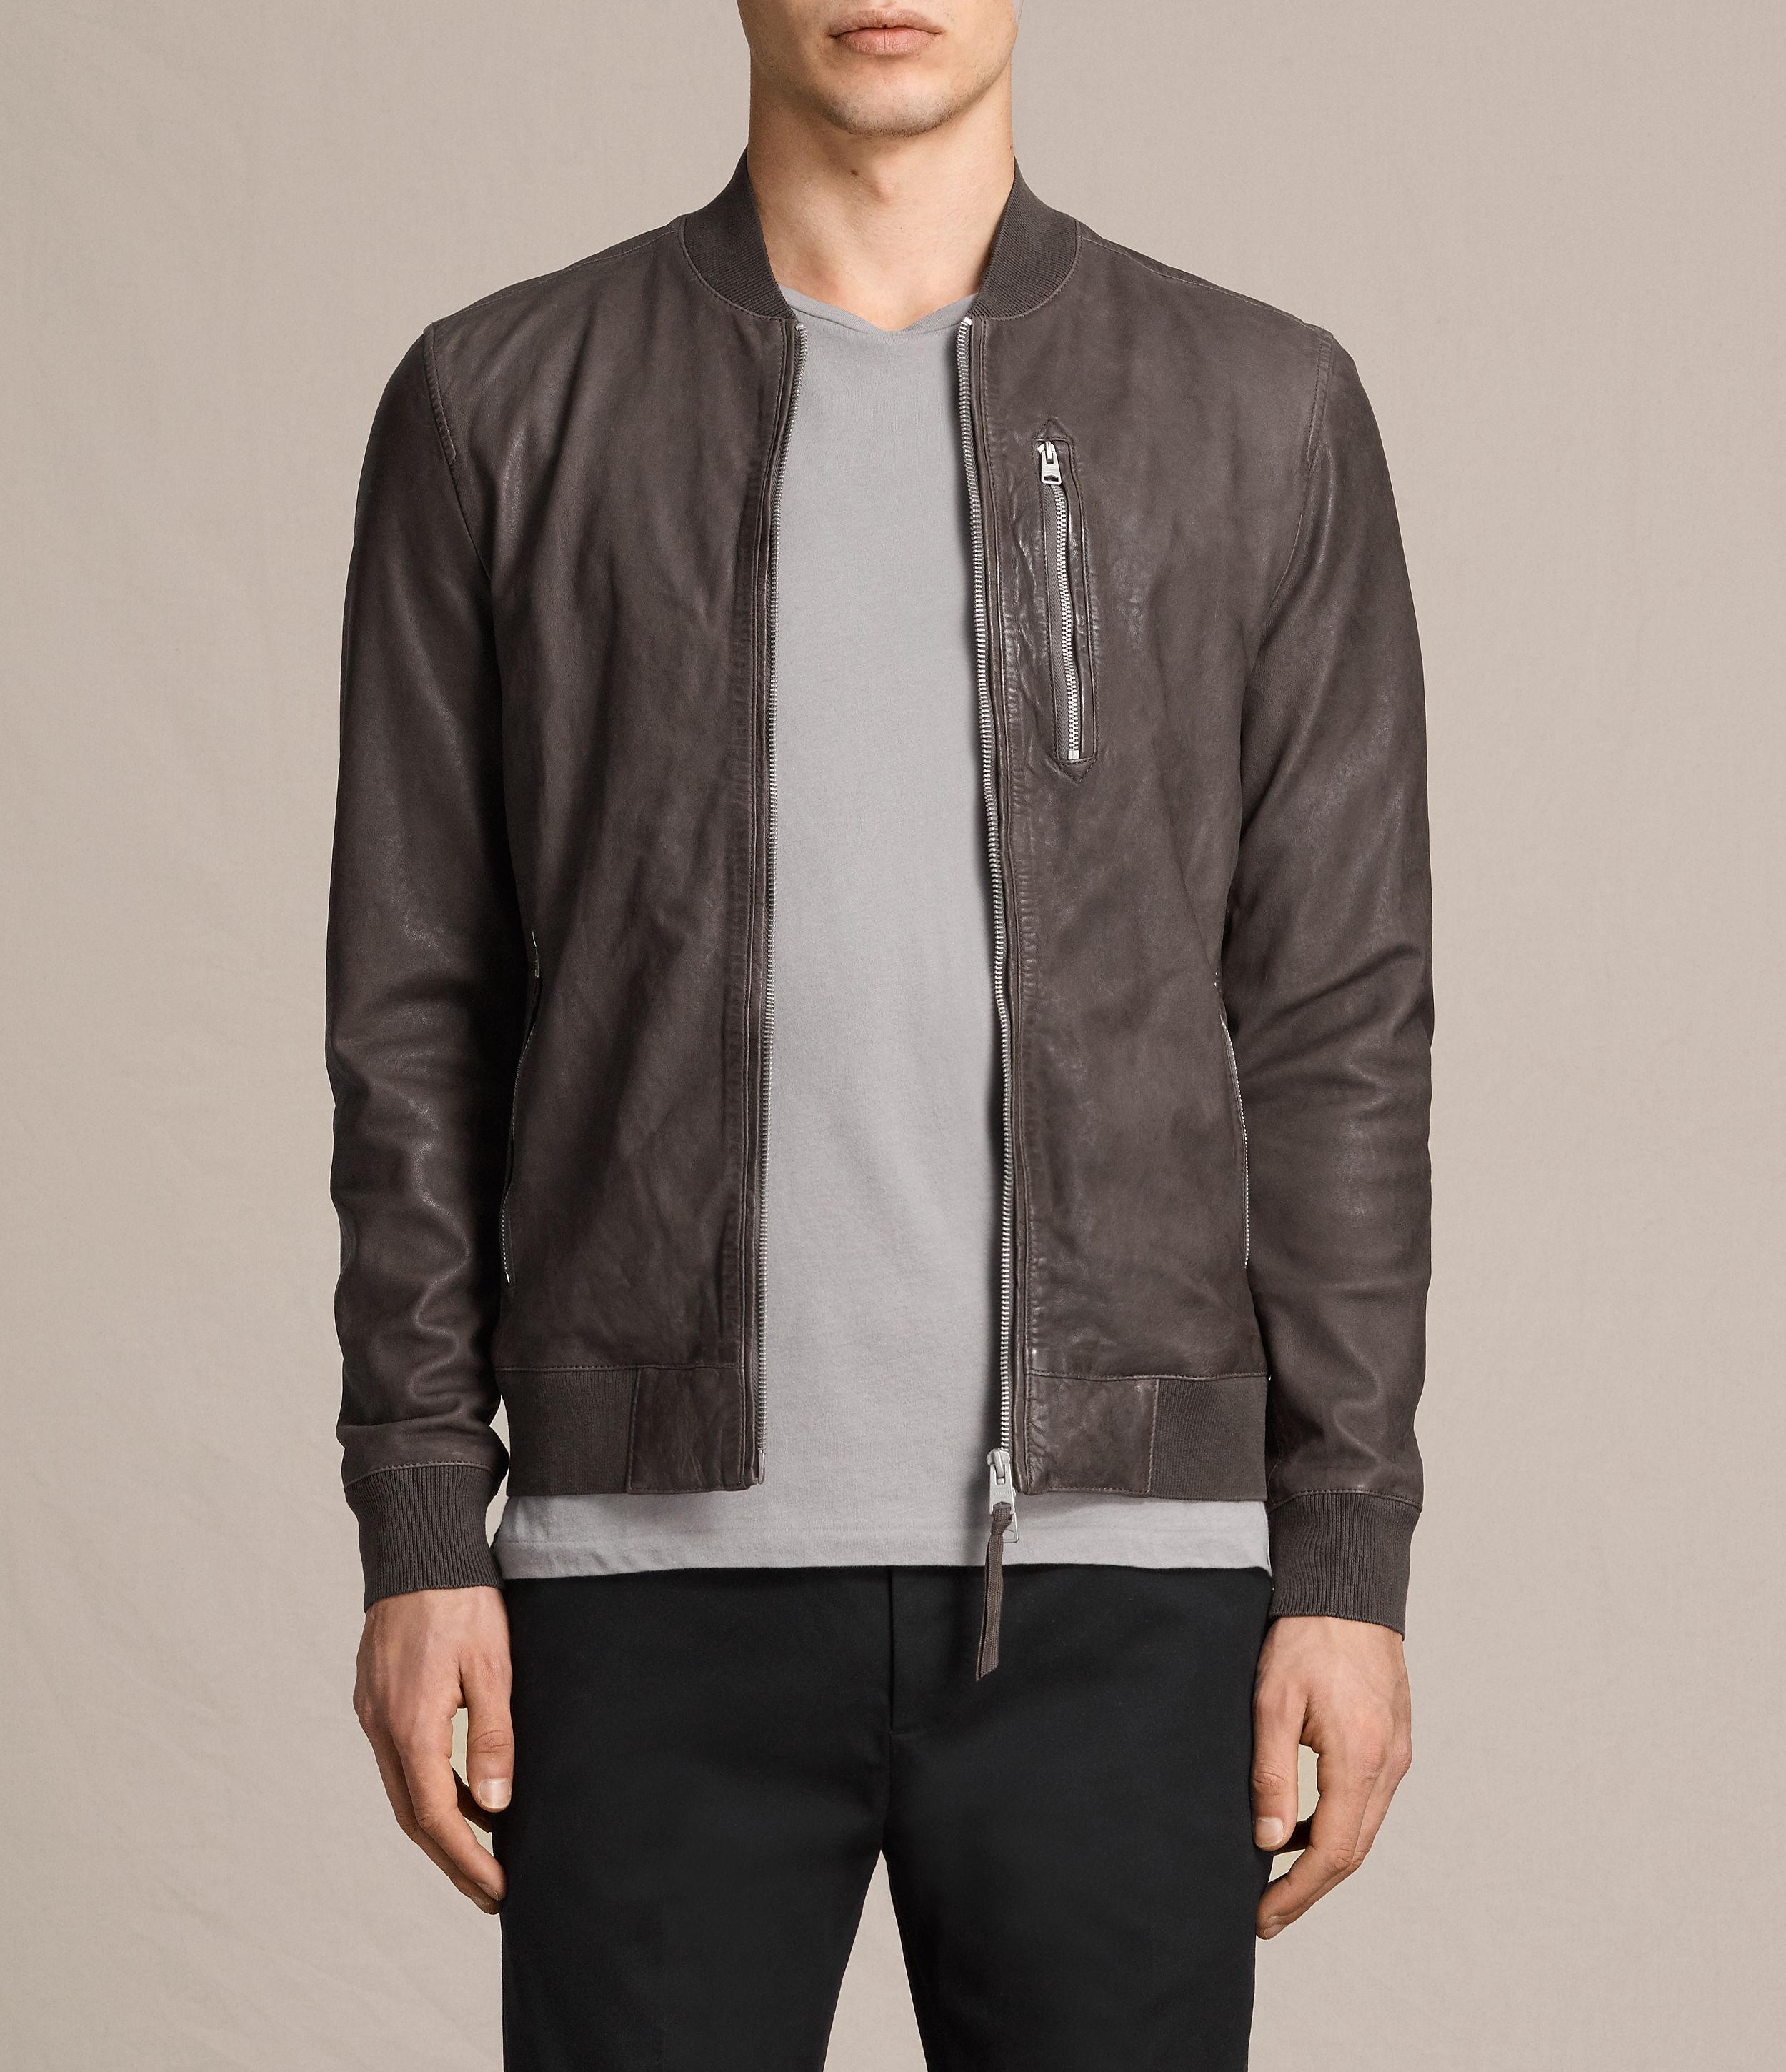 AllSaints Kino Leather Bomber Jacket in Gray for Men - Lyst